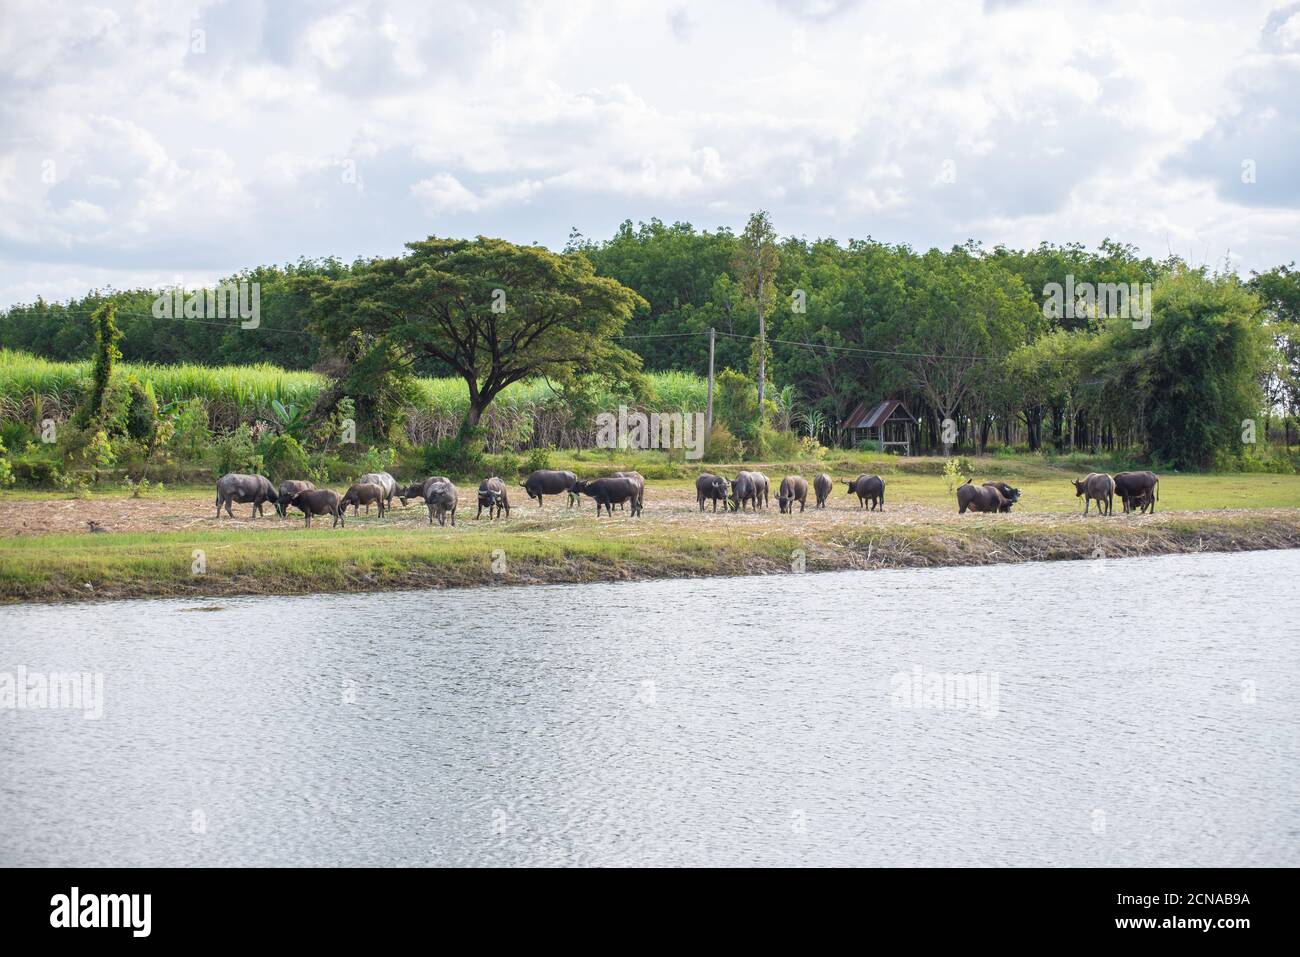 Buffalo in the grasslands along the river. Stock Photo